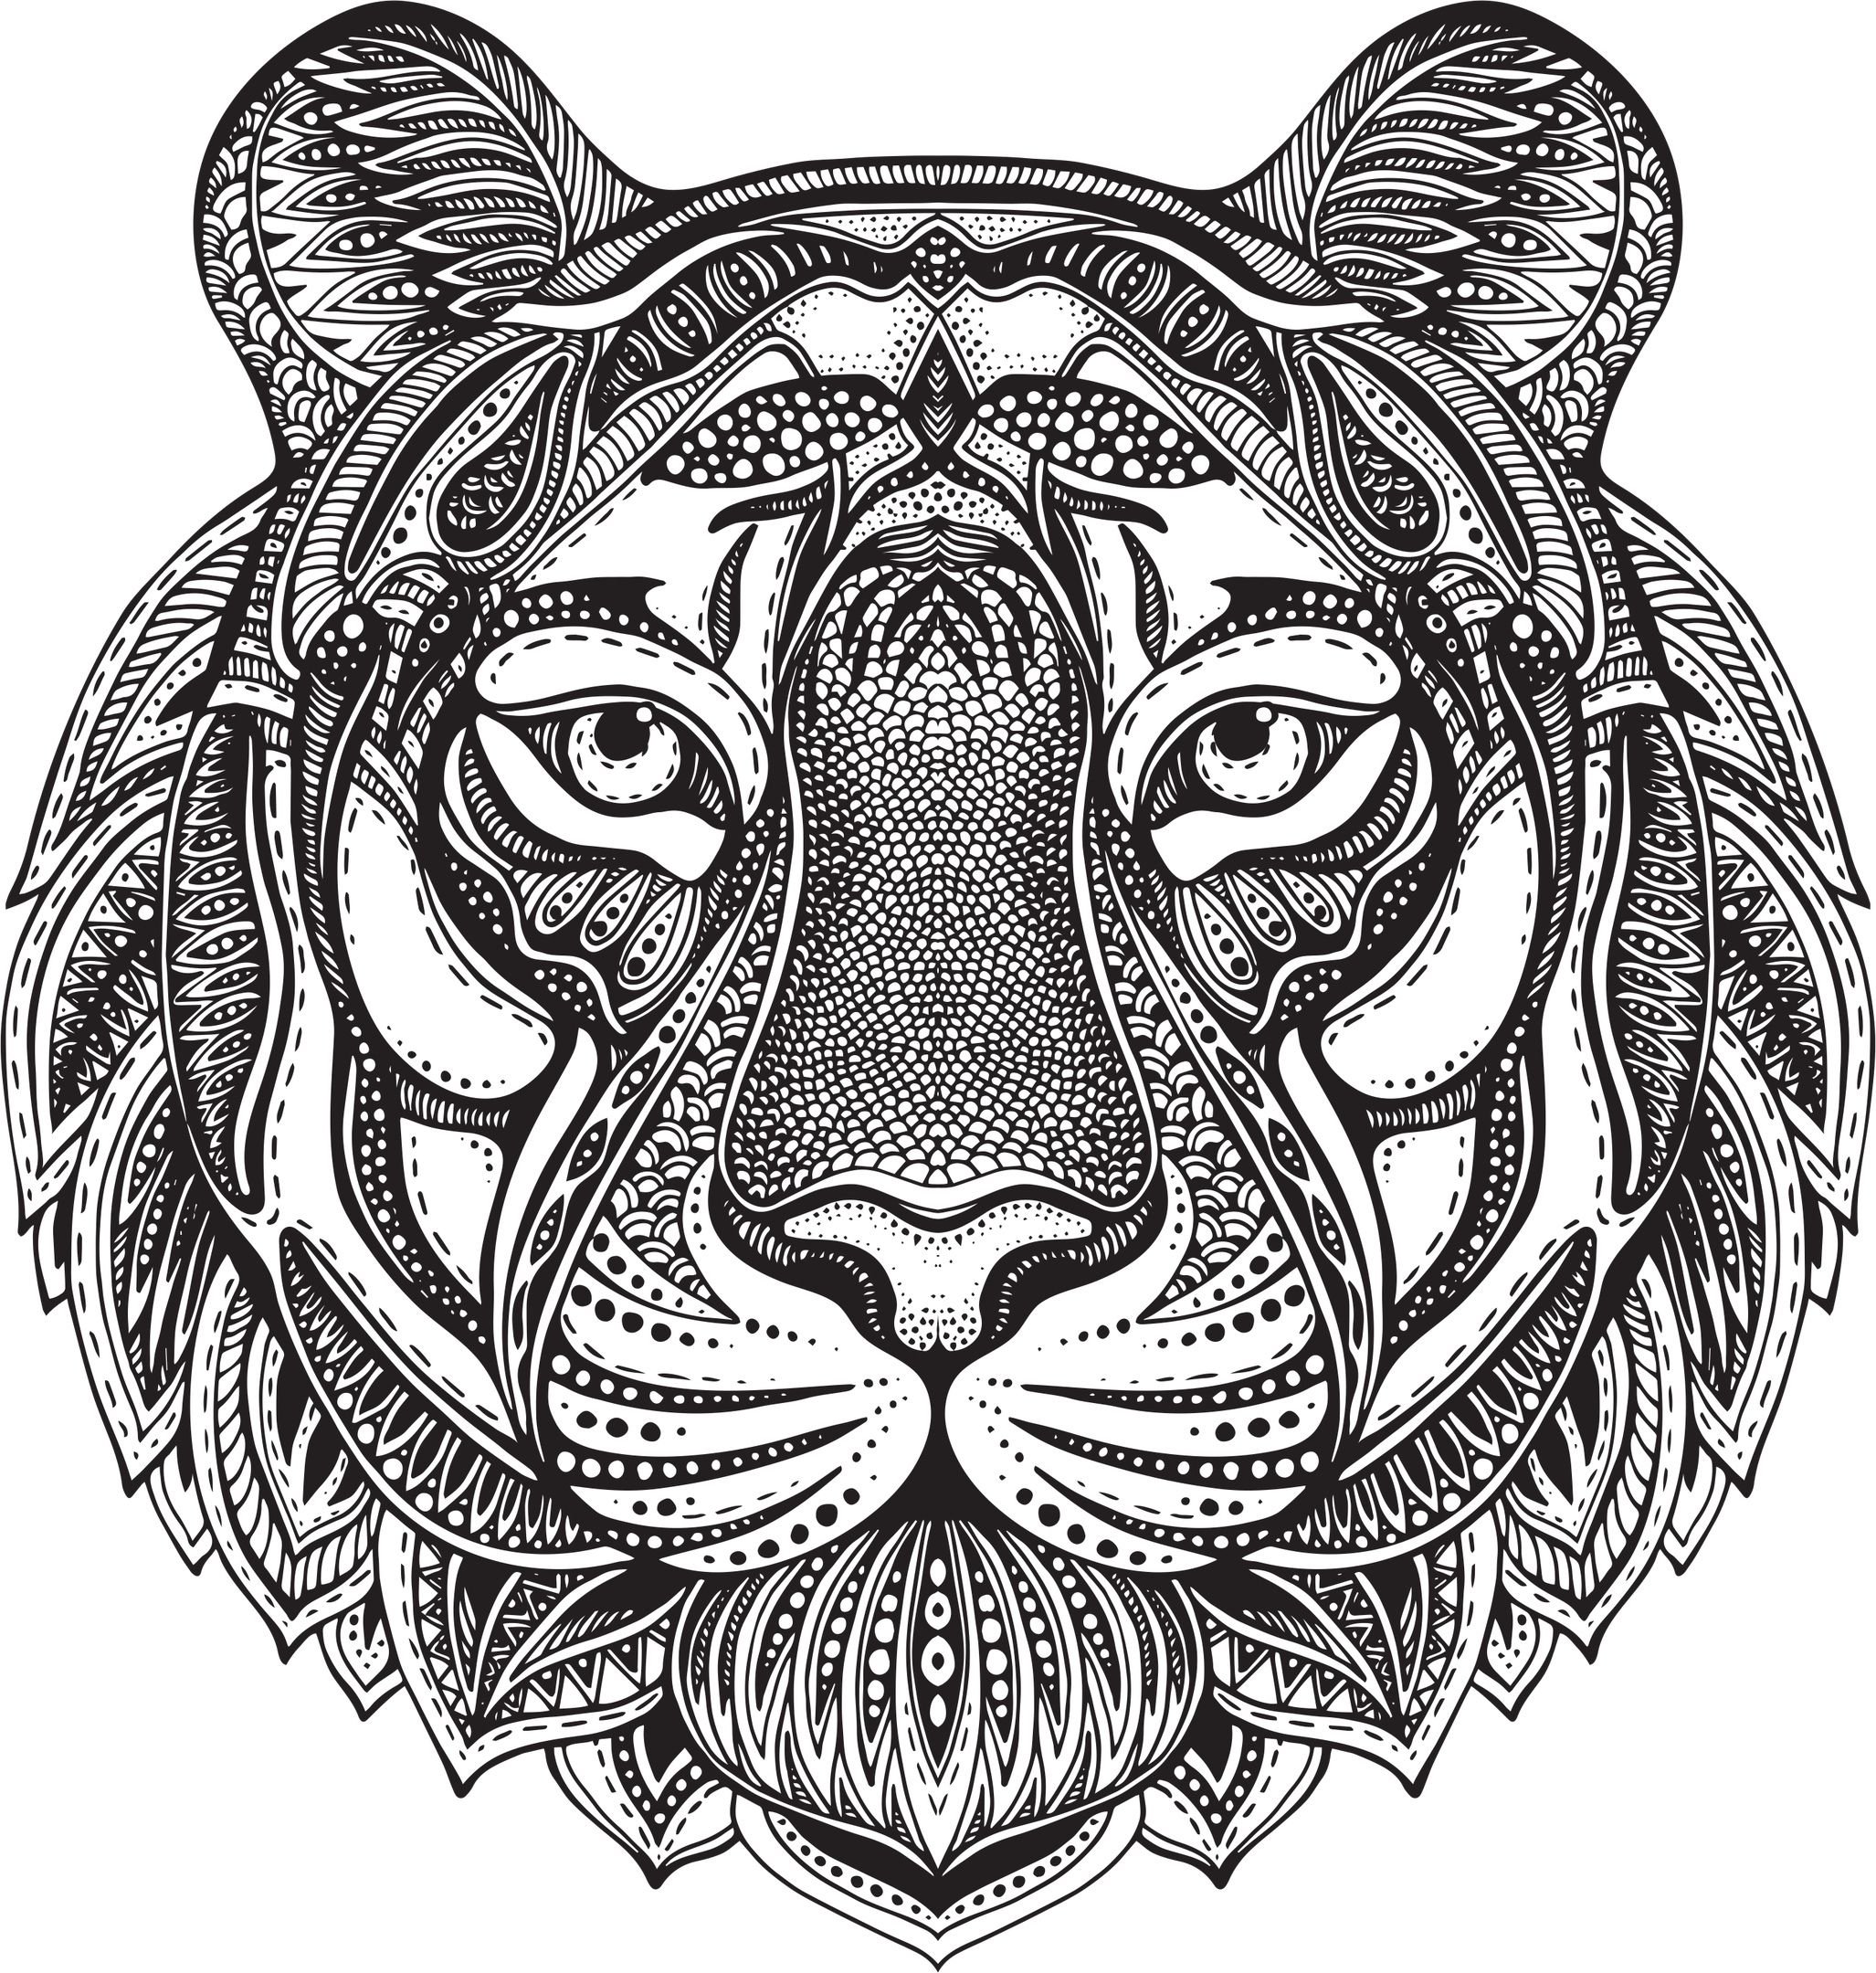 Раскраска антистресс тигр